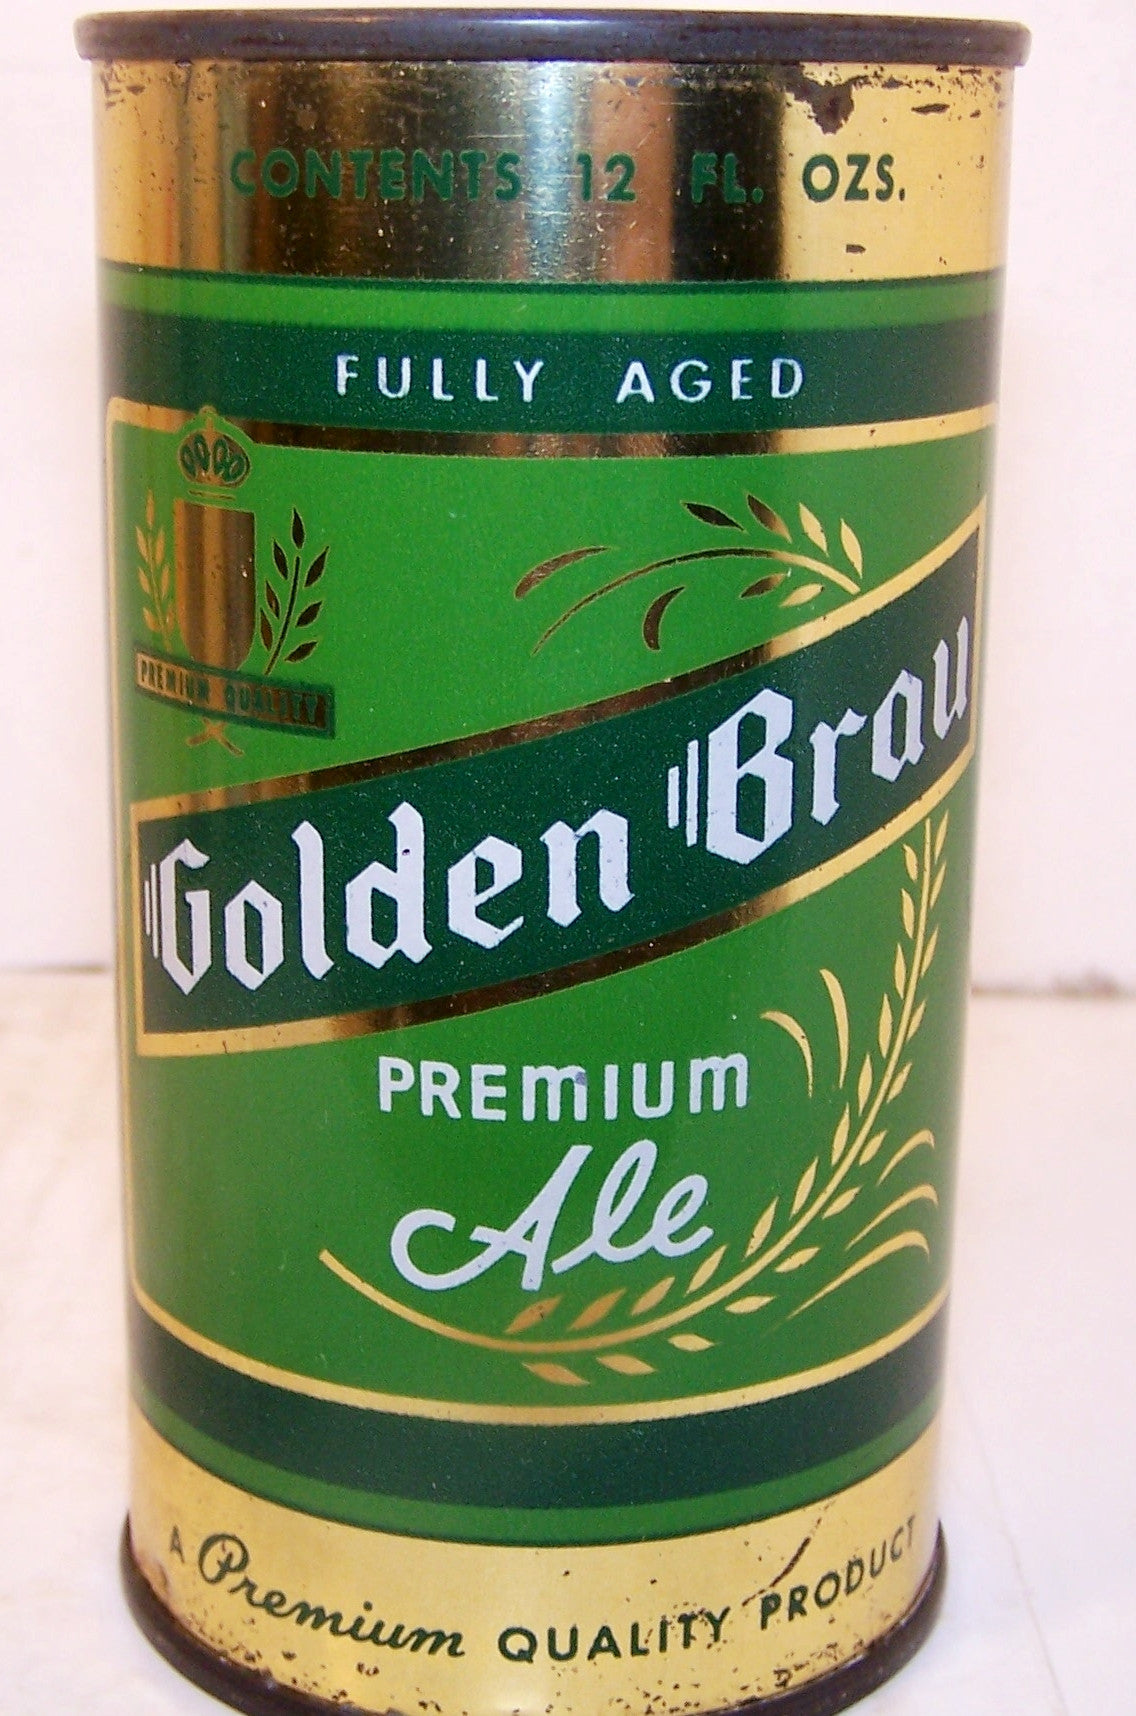 Golden Brau Premium Ale, USBC 72-20, Grade 1. Sold 1/17/15